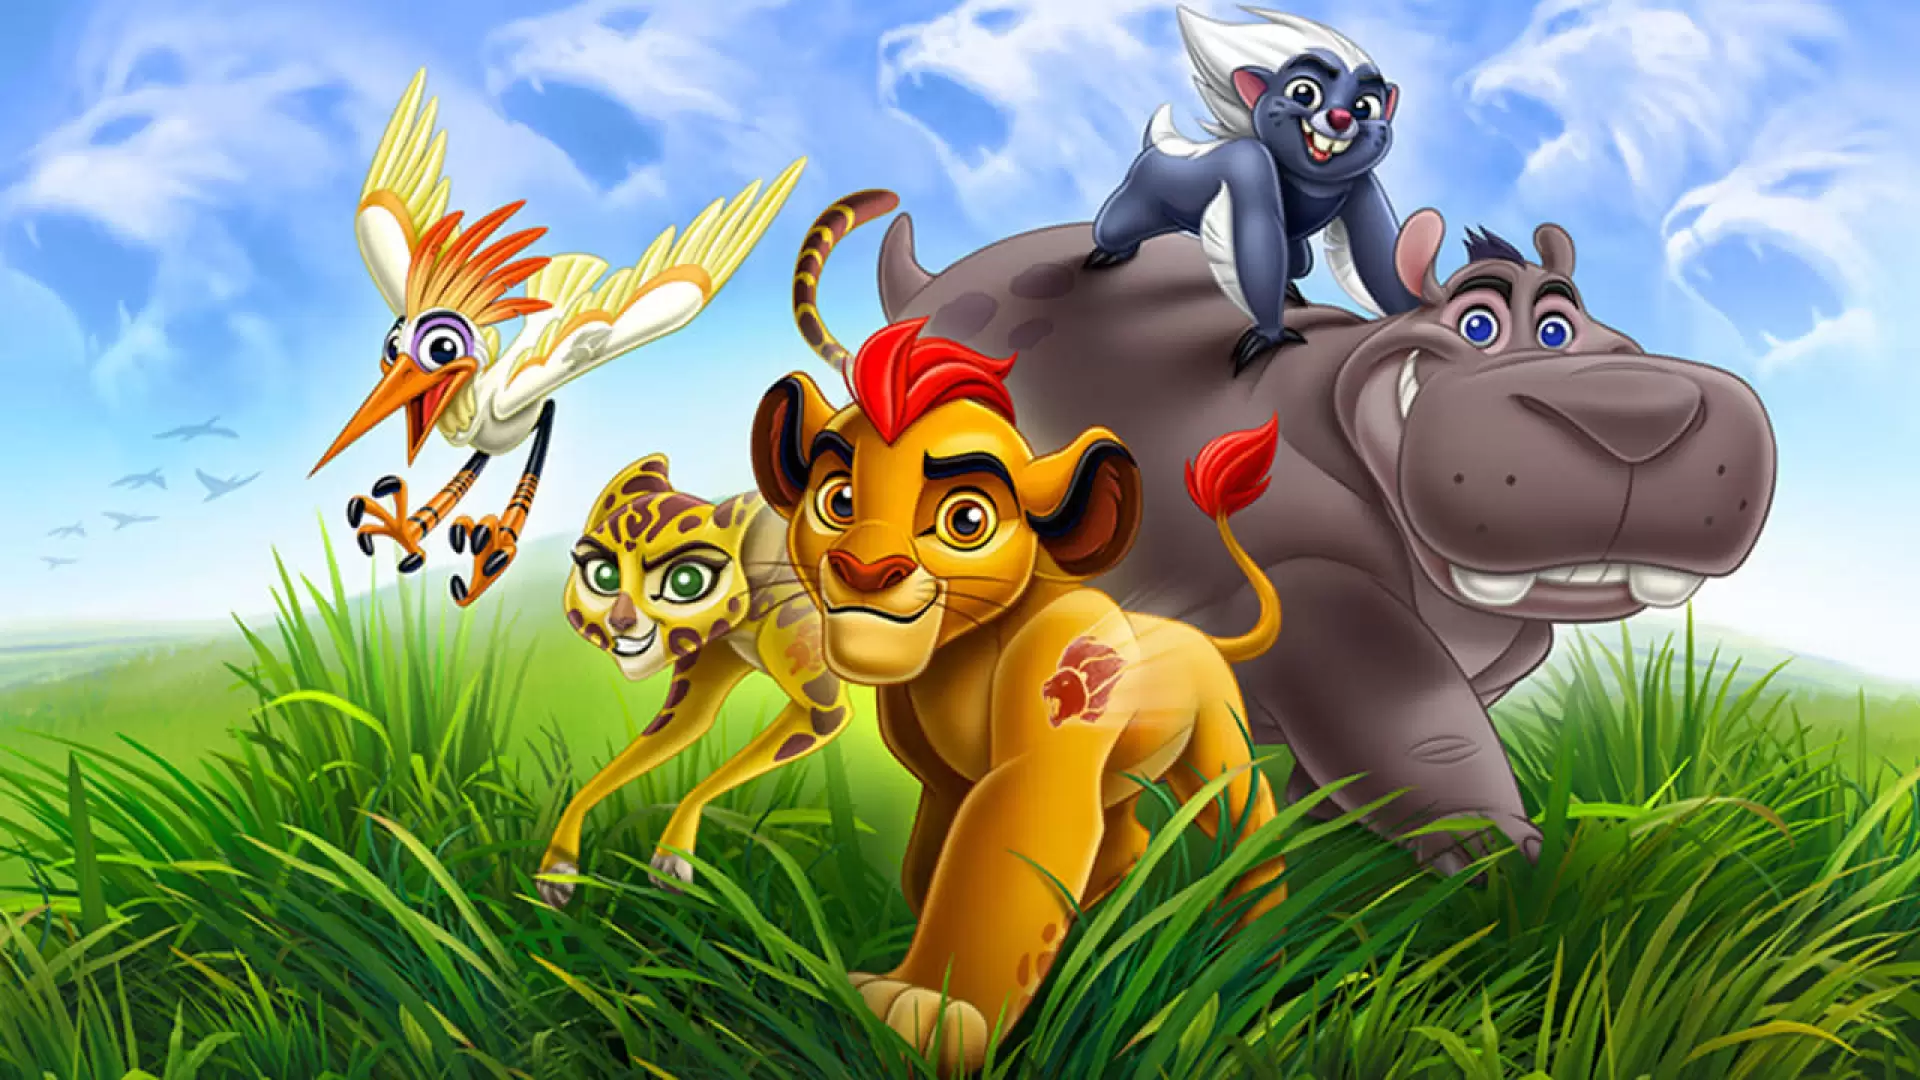 دانلود انیمیشن The Lion Guard: Return of the Roar 2015 با زیرنویس فارسی